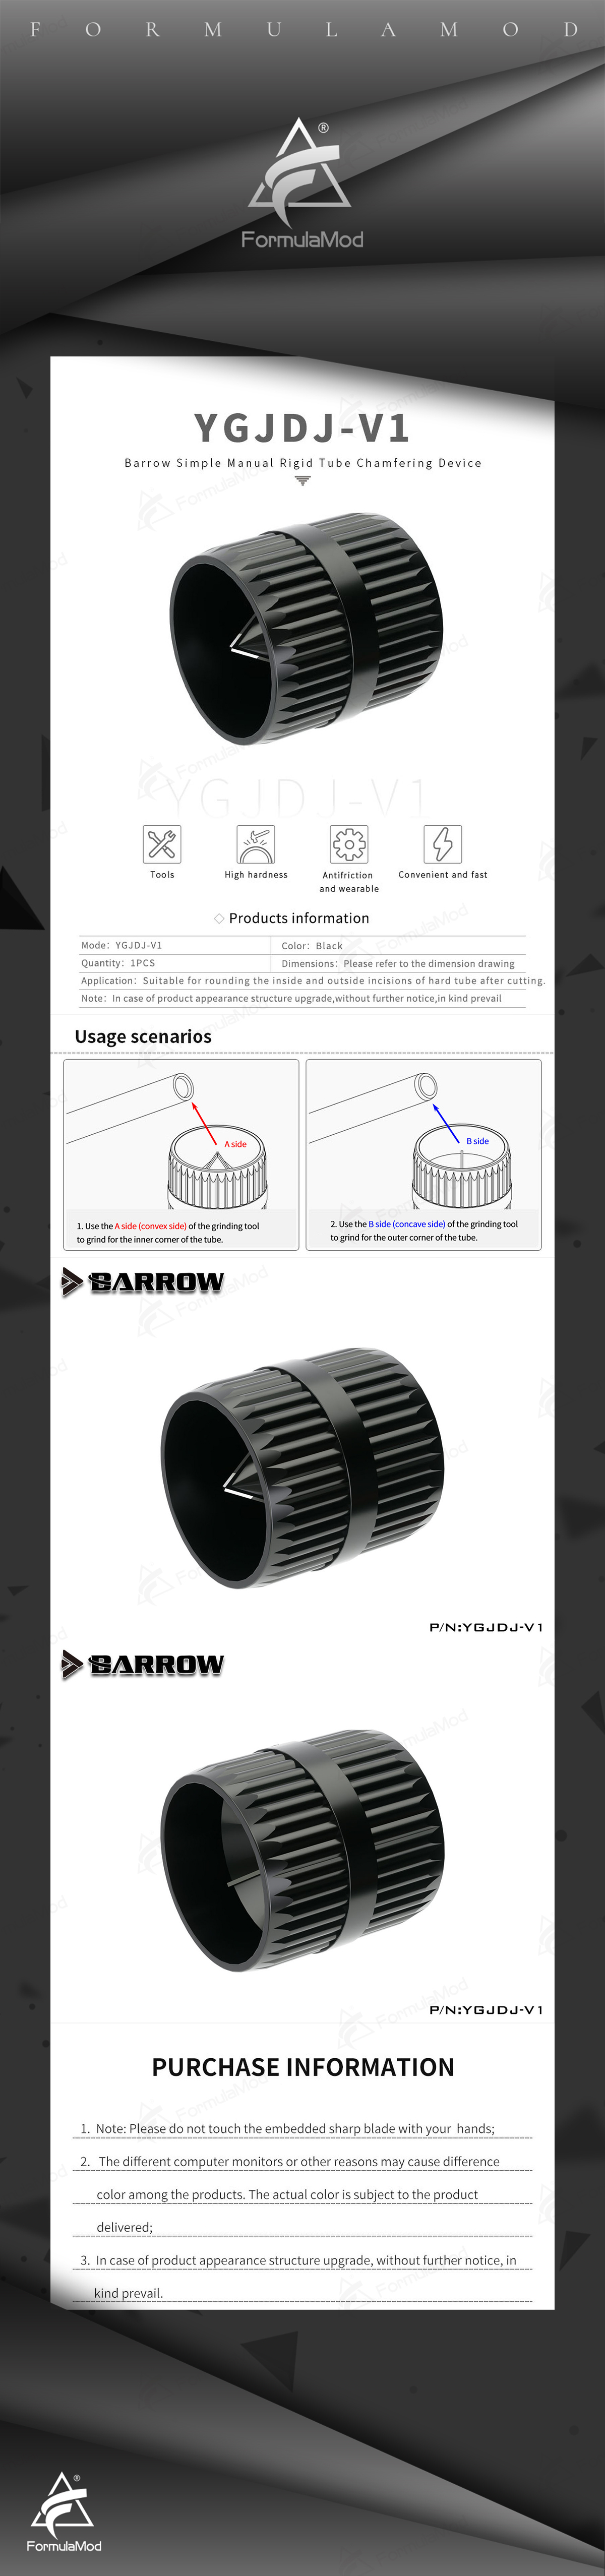 Barrow Tube Chamfering Device, Grinding Tools For Acrylic/ PETG Hard Tube, Remove Spikes Simple Manual Rigid Tube Grinder, YGJDJ-V1  